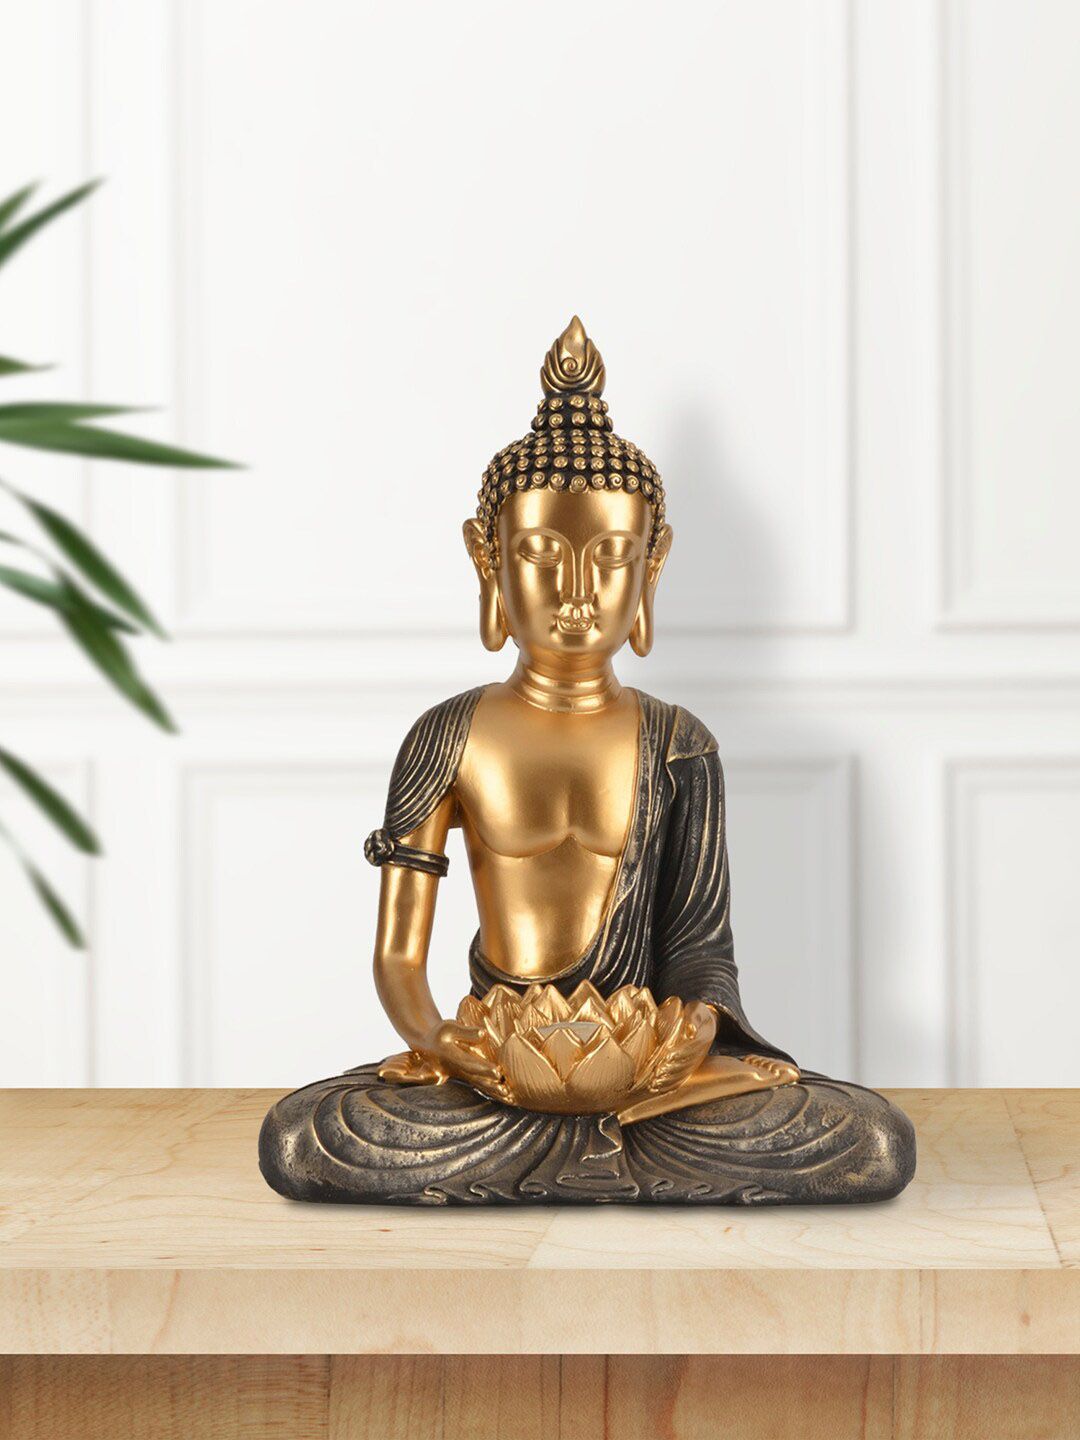 HomeTown Golden-Coloured Lotus Buddha Figurine Showpiece Price in India